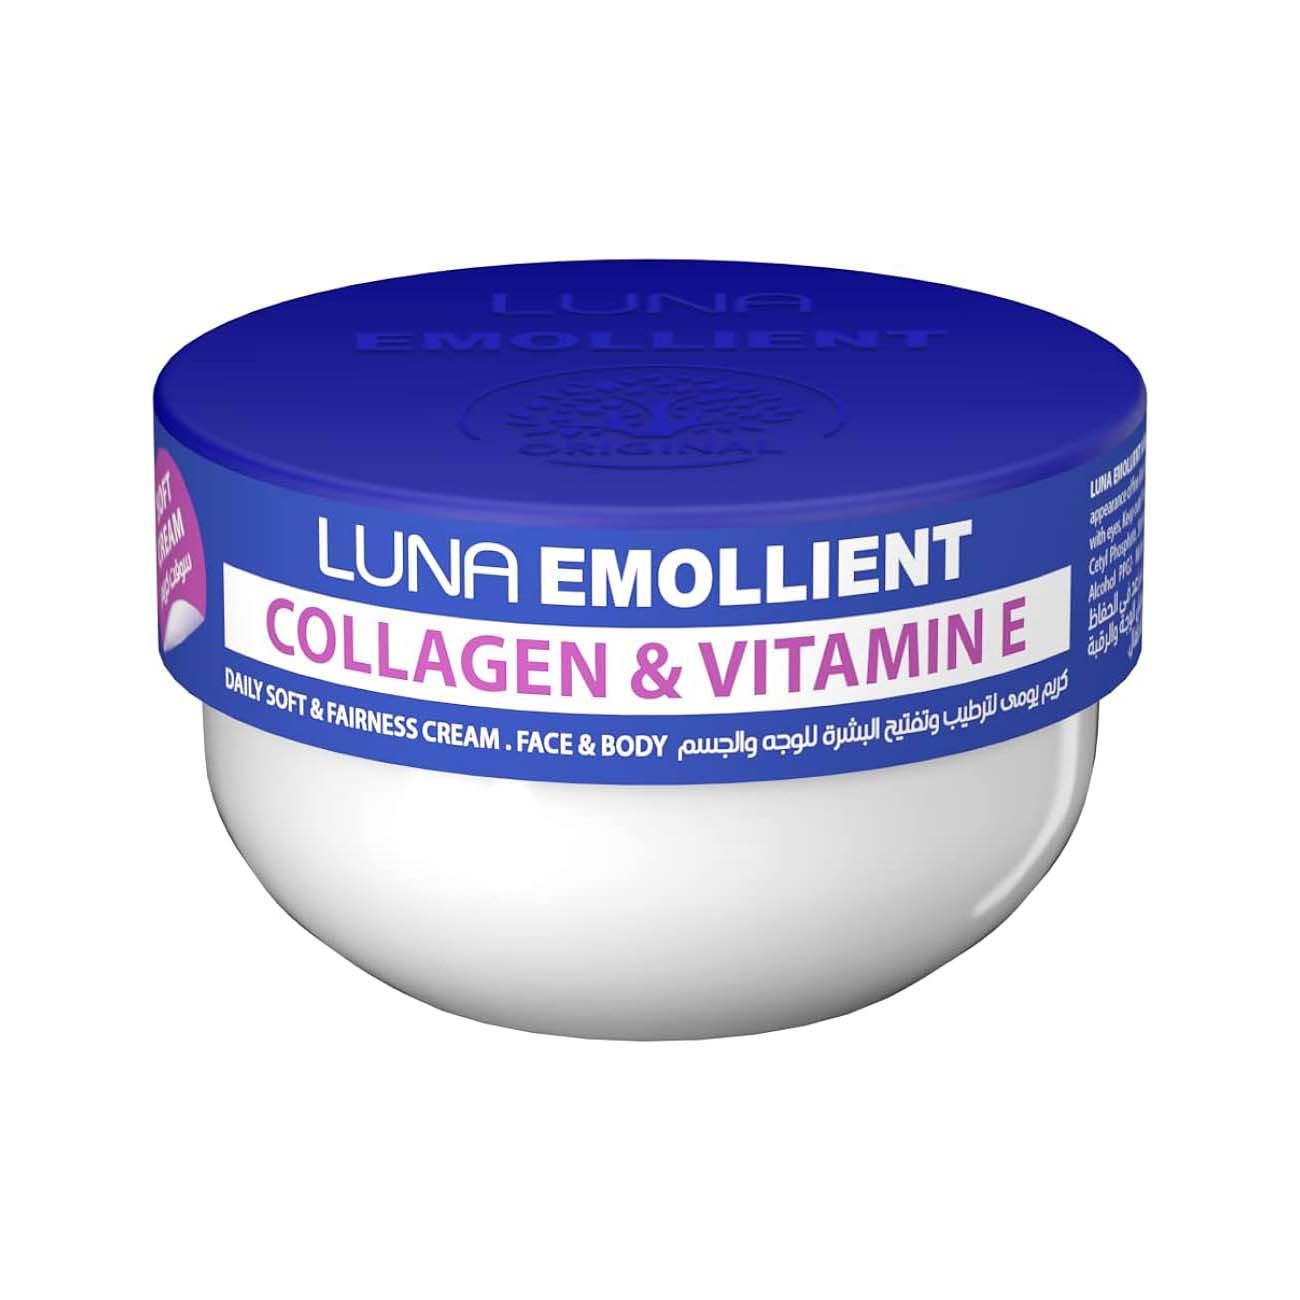 Luna Emollient Collagen & Vitamin E Moisturizing Cream - Bloom Pharmacy